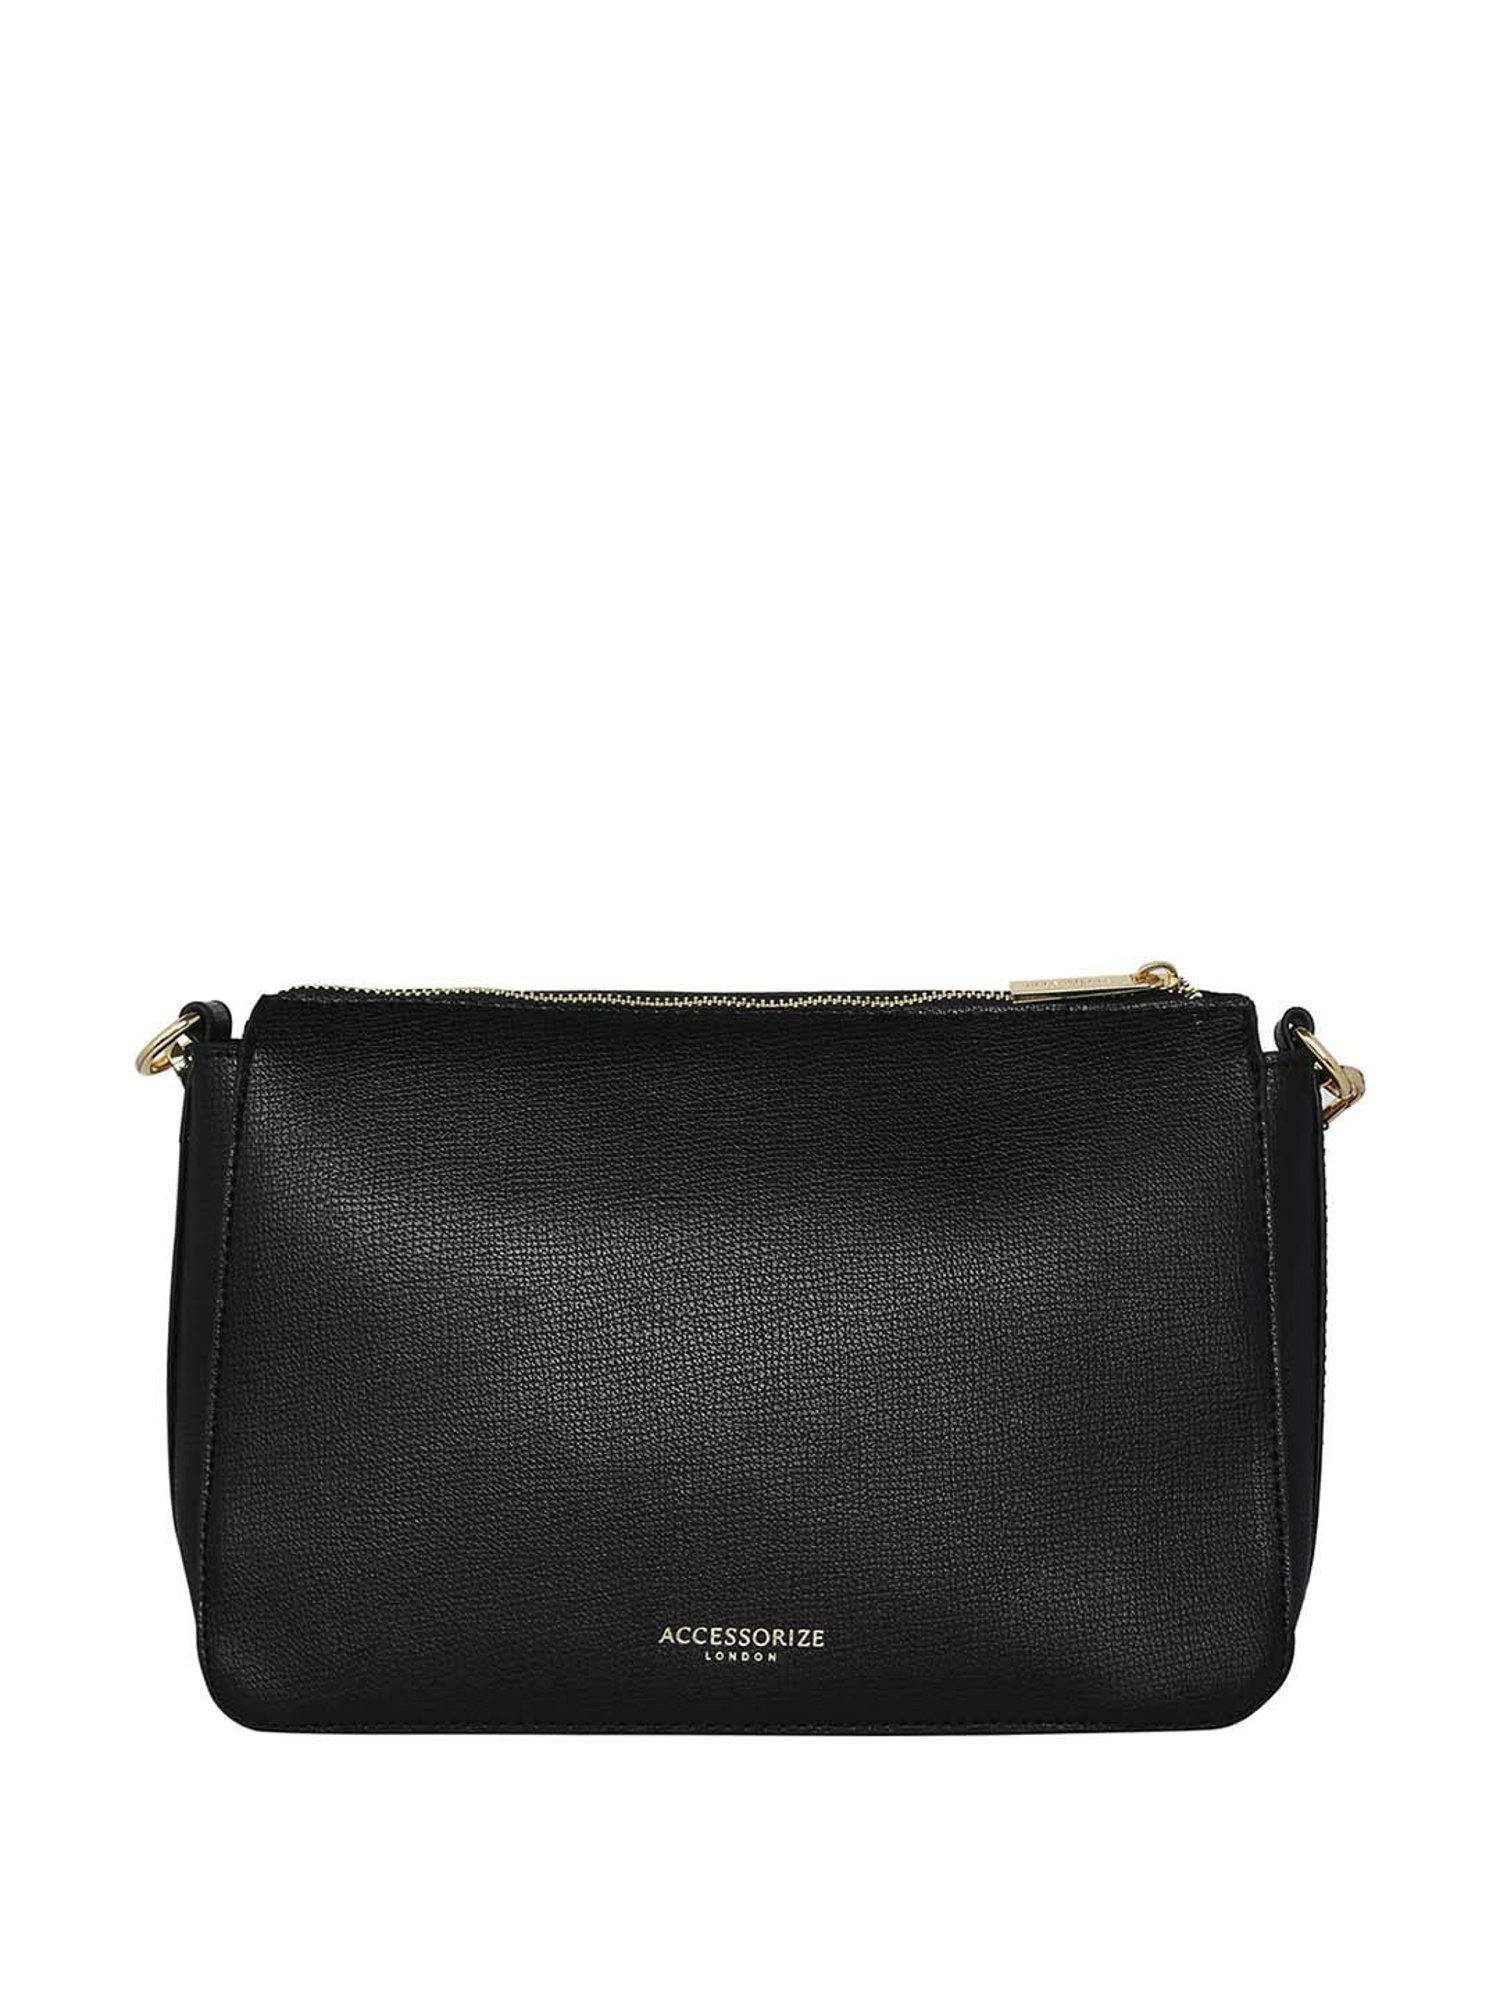 Buy Accessorize London Women's Black Front Pocket Crossbody Bag online